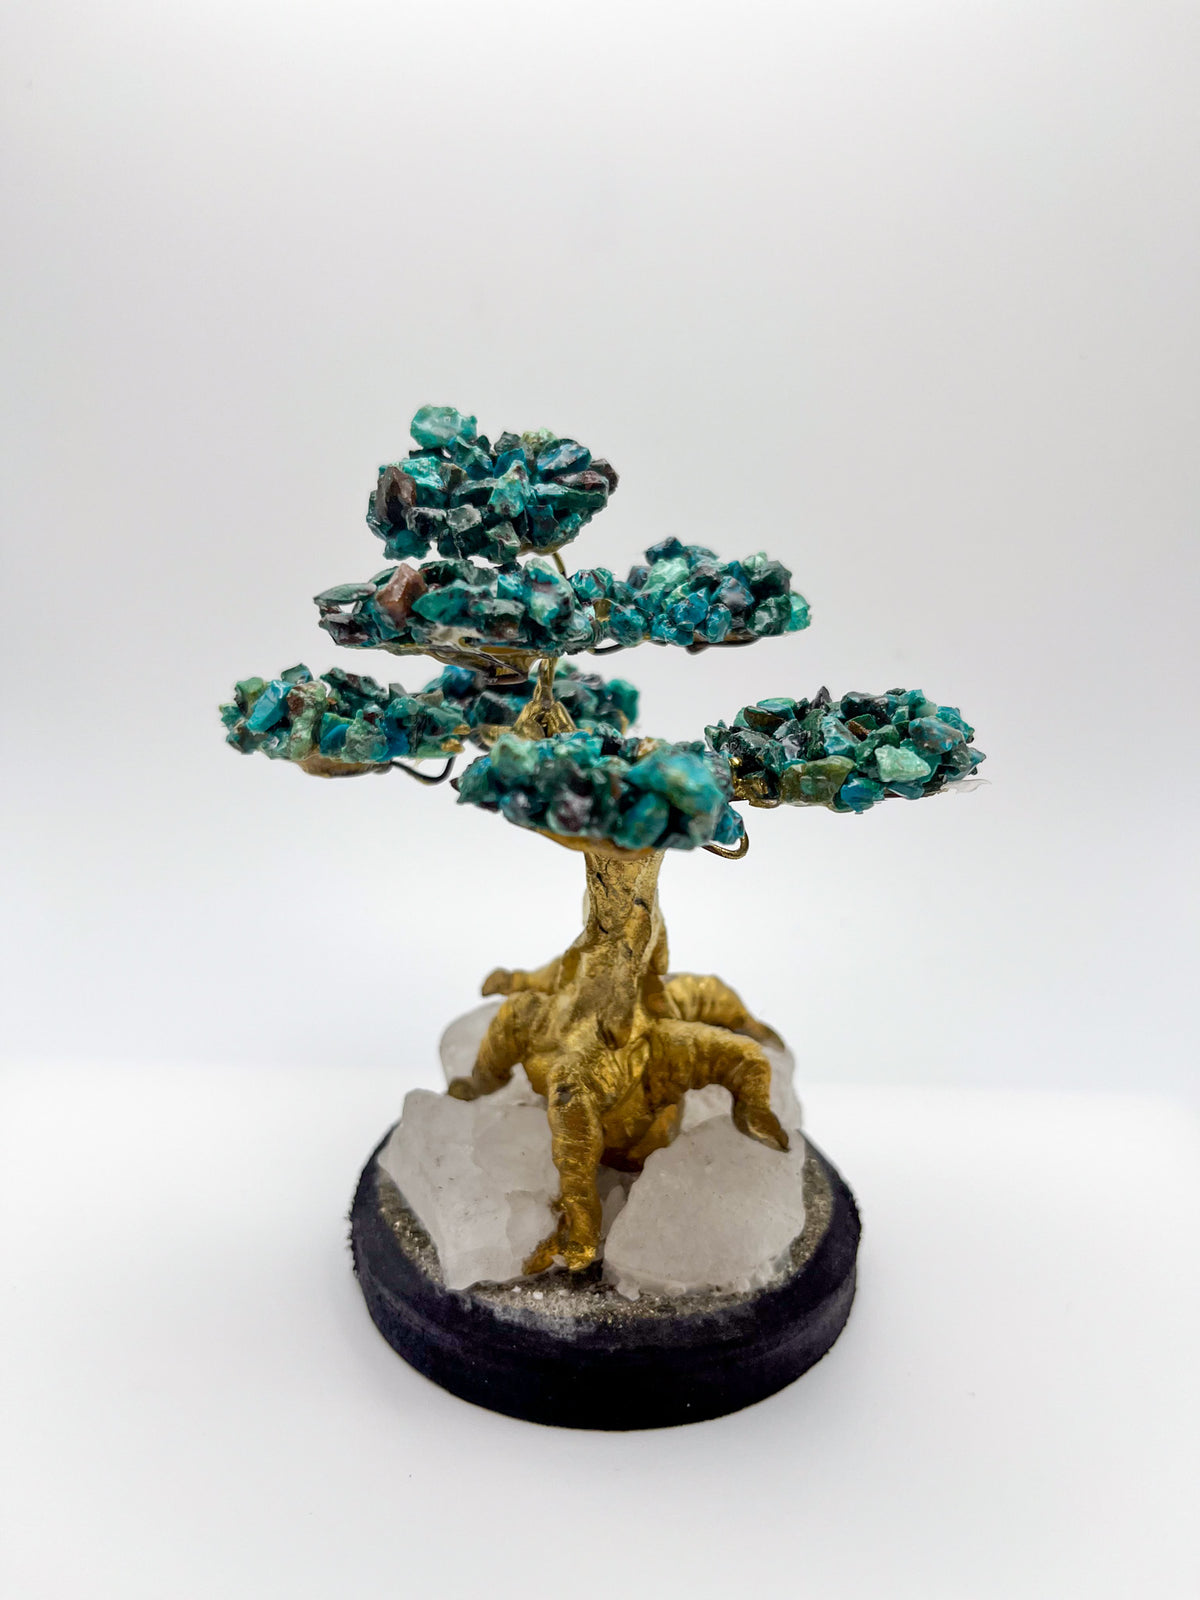 Gemstone Trees - Not Every Libra